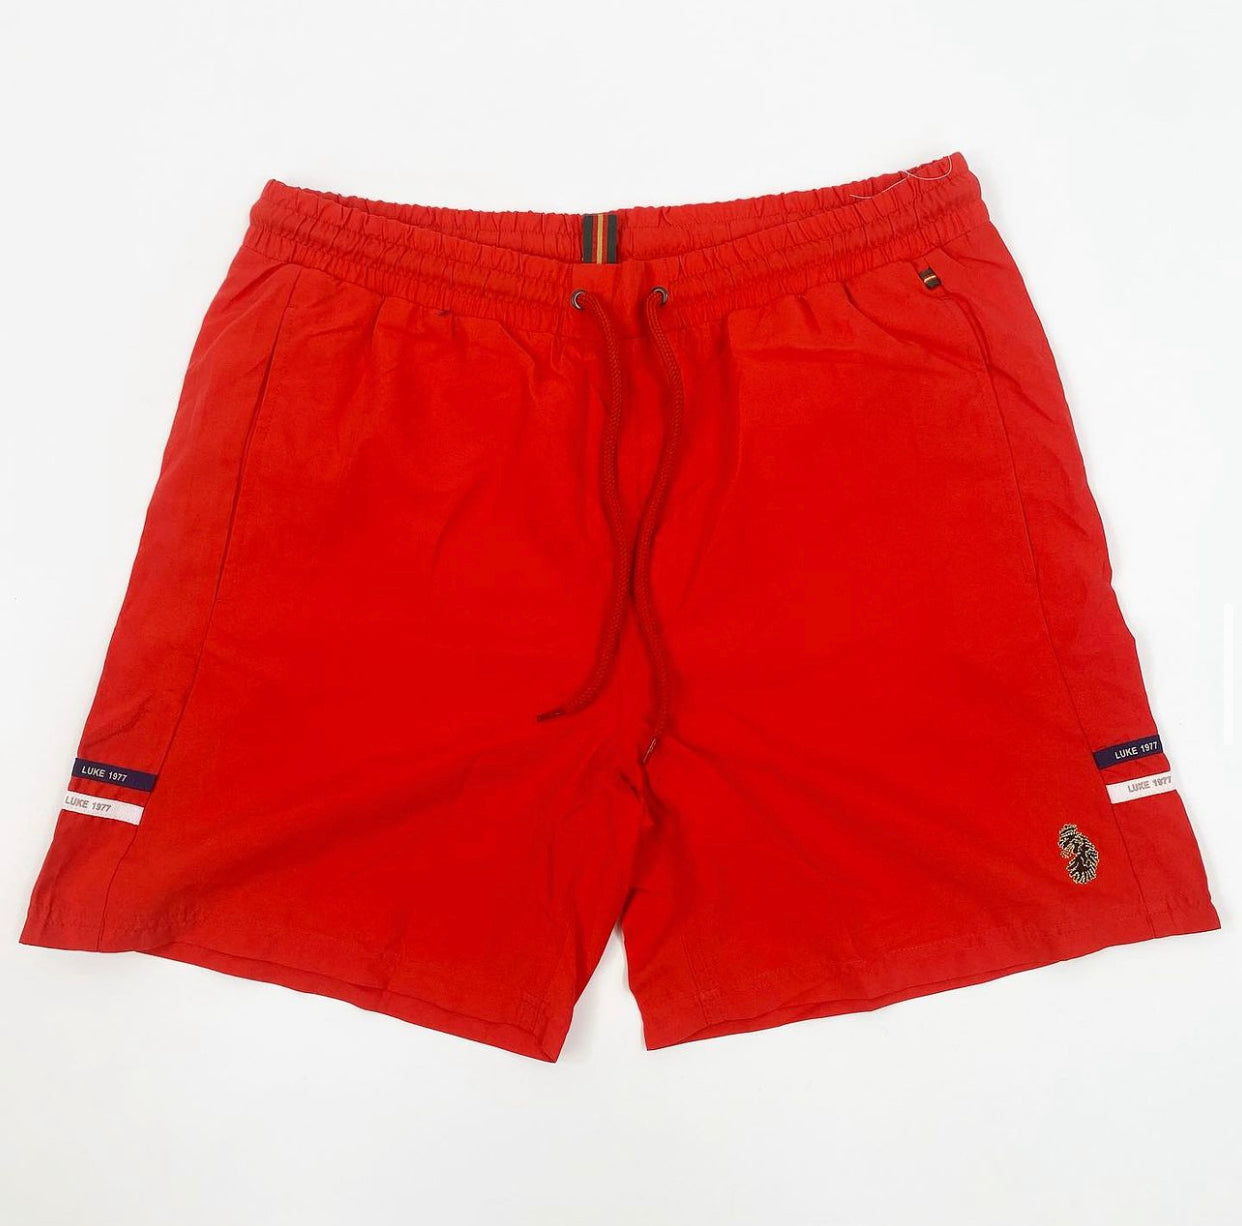 City red swim shorts